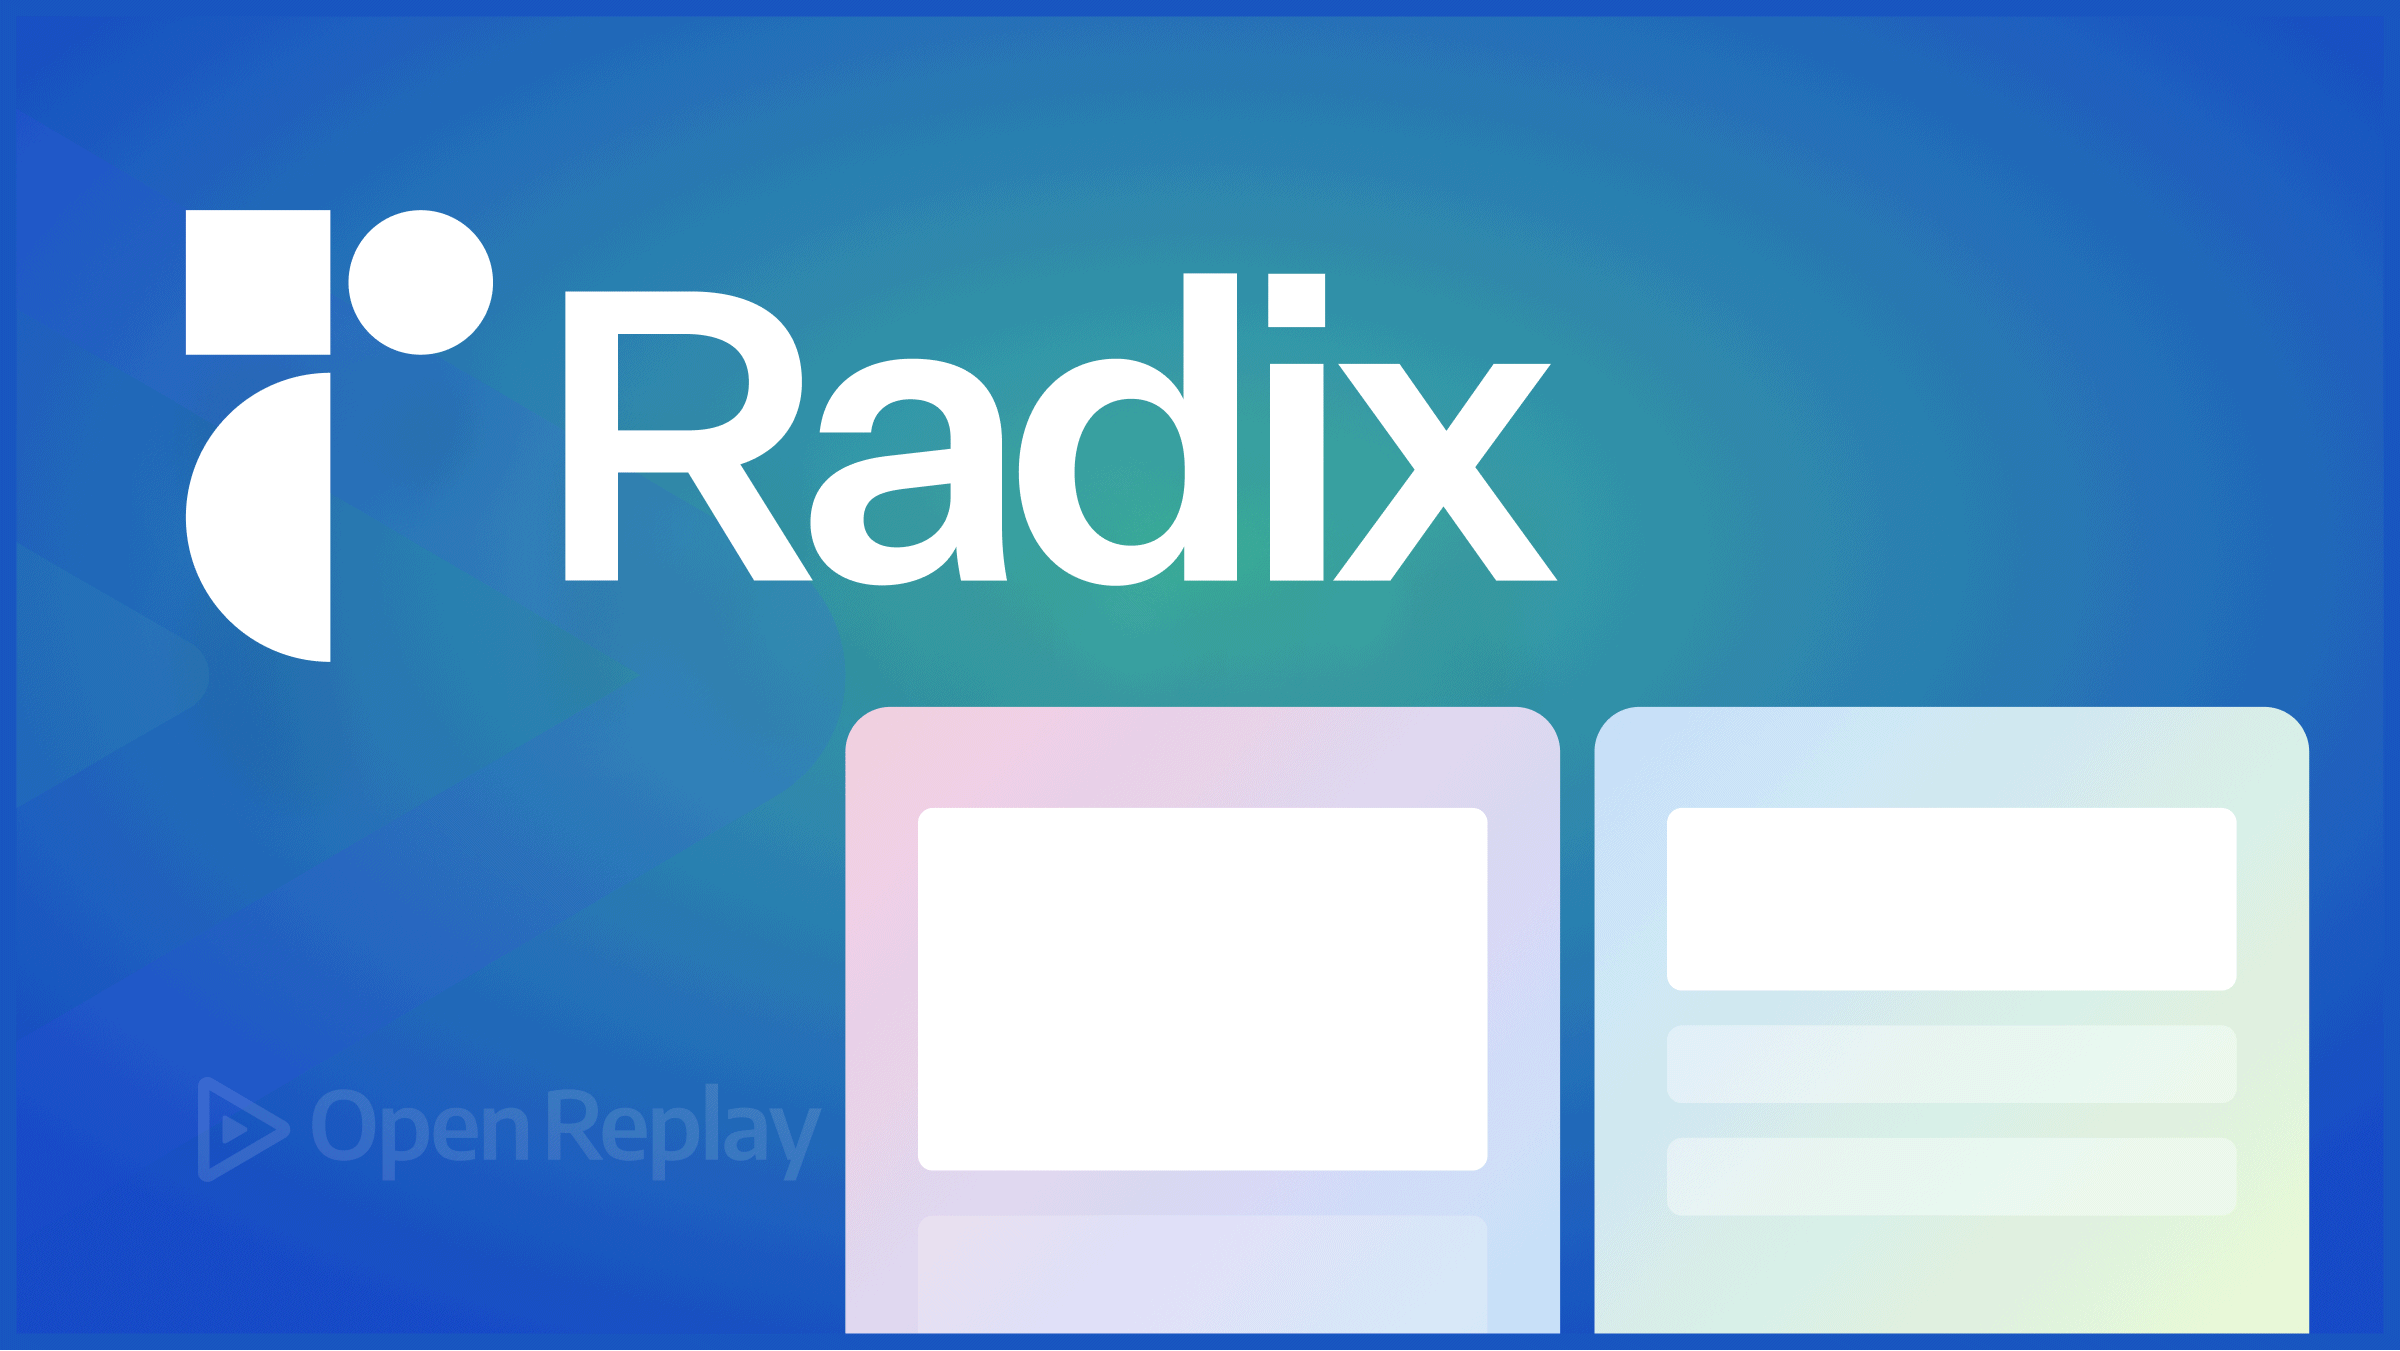 Creating a Design System using Radix